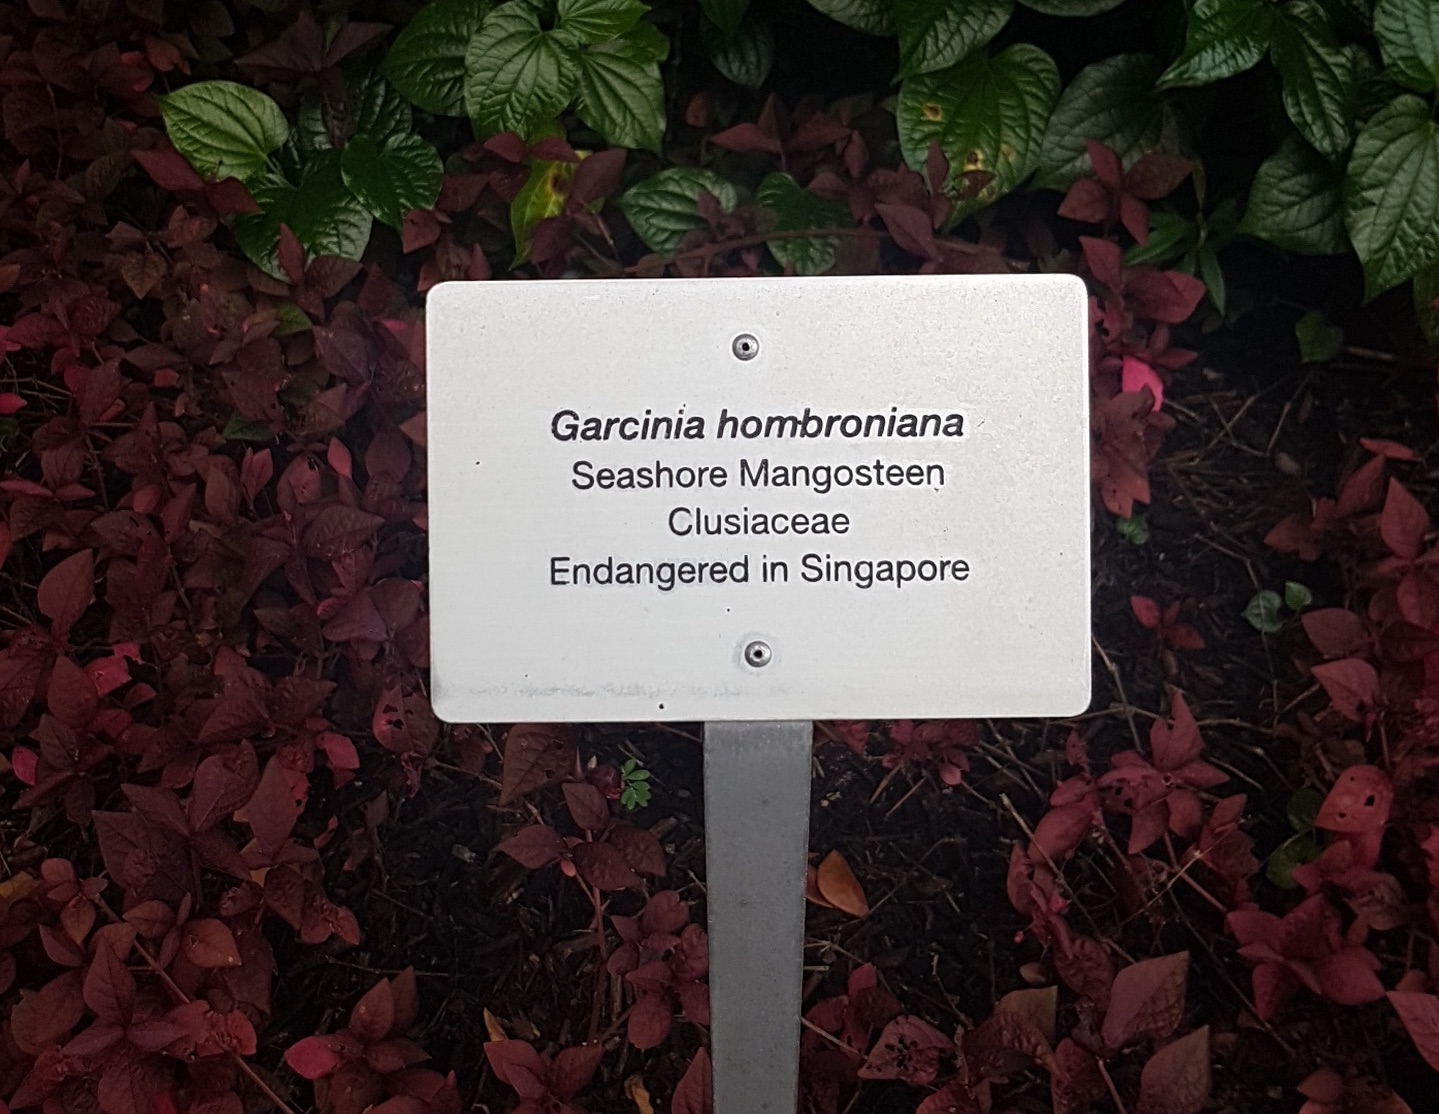 Garcinia hombroniana NUS UHall Label.jpg